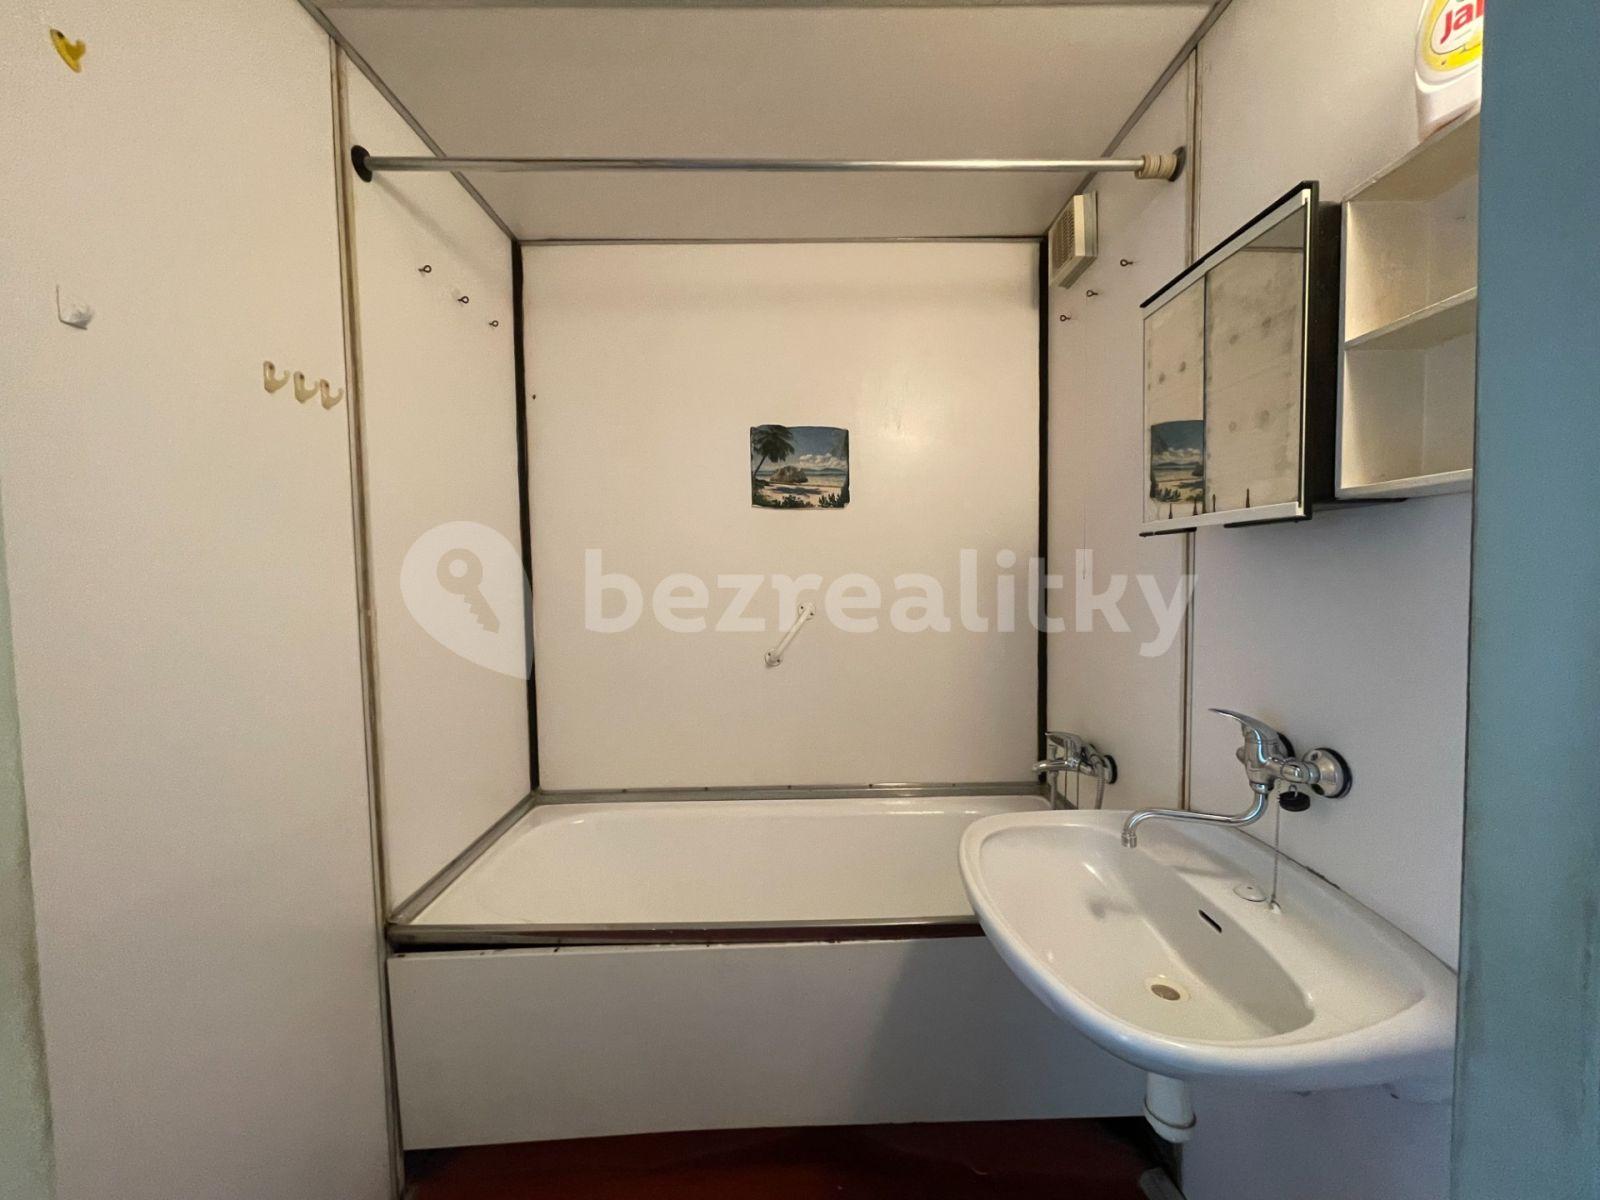 3 bedroom flat for sale, 64 m², Konstantinova, Prague, Prague